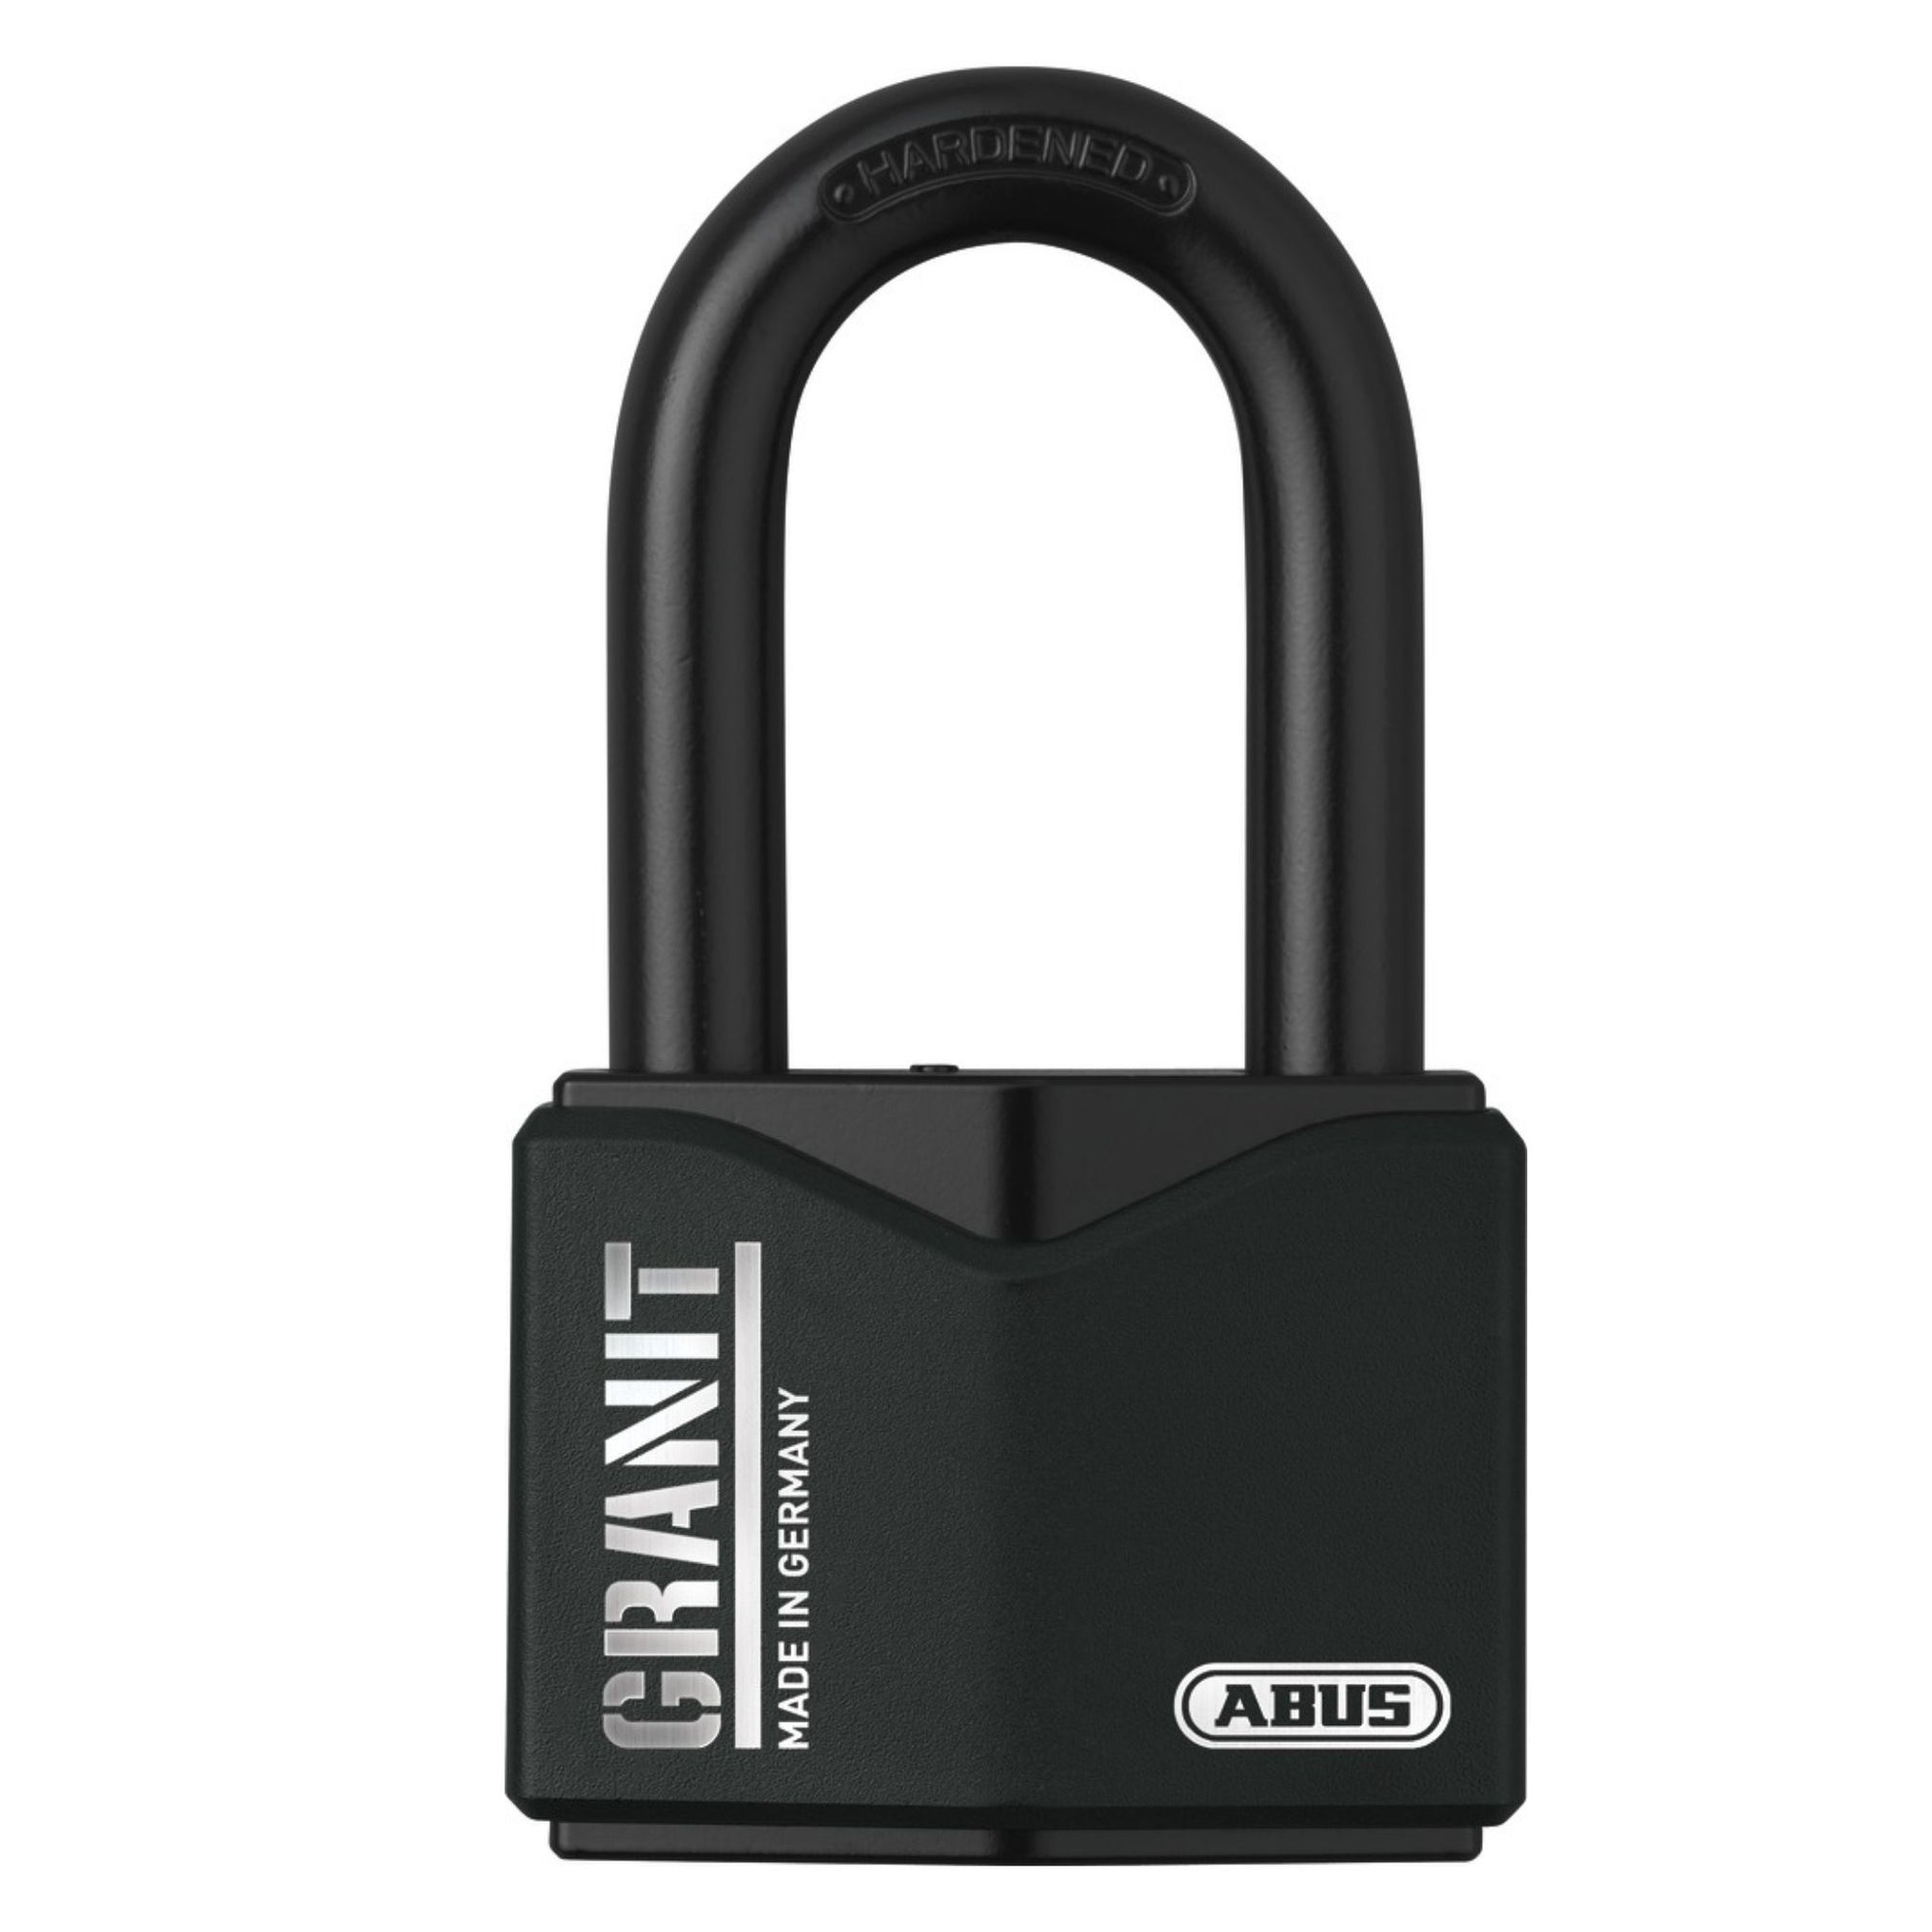 Abus 37RK/55HB50 MK 0694 Granit Padlock Master Keyed Locks with 2" Shackle Matched to Existing Master Key# MK0694 - The Lock Source